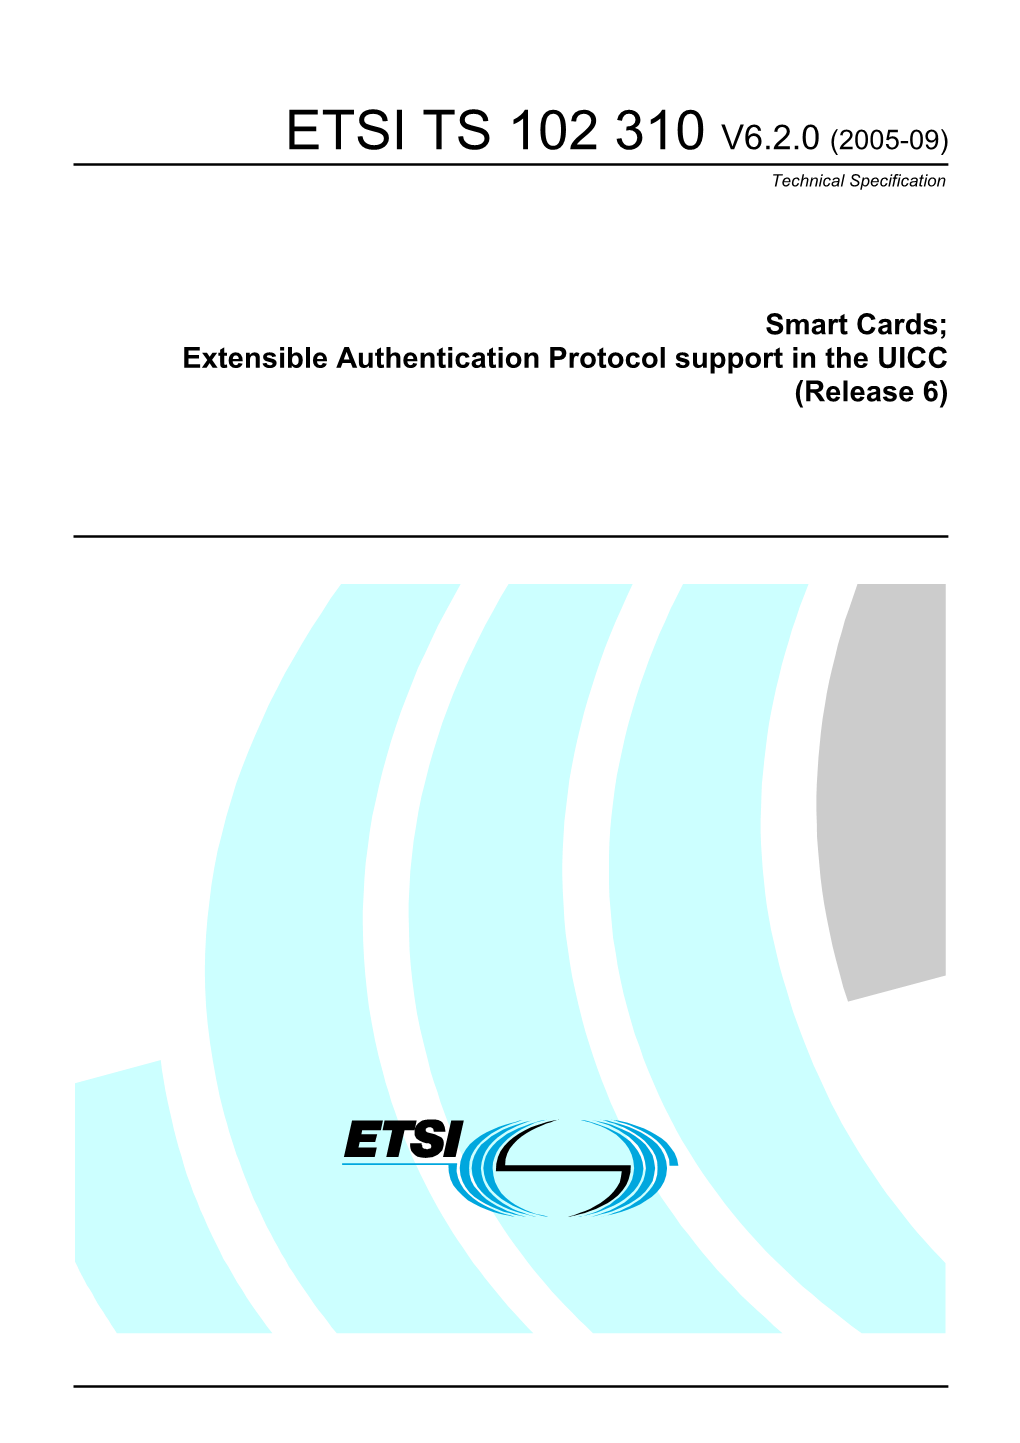 ETSI TS 102 310 V6.2.0 (2005-09) Technical Specification